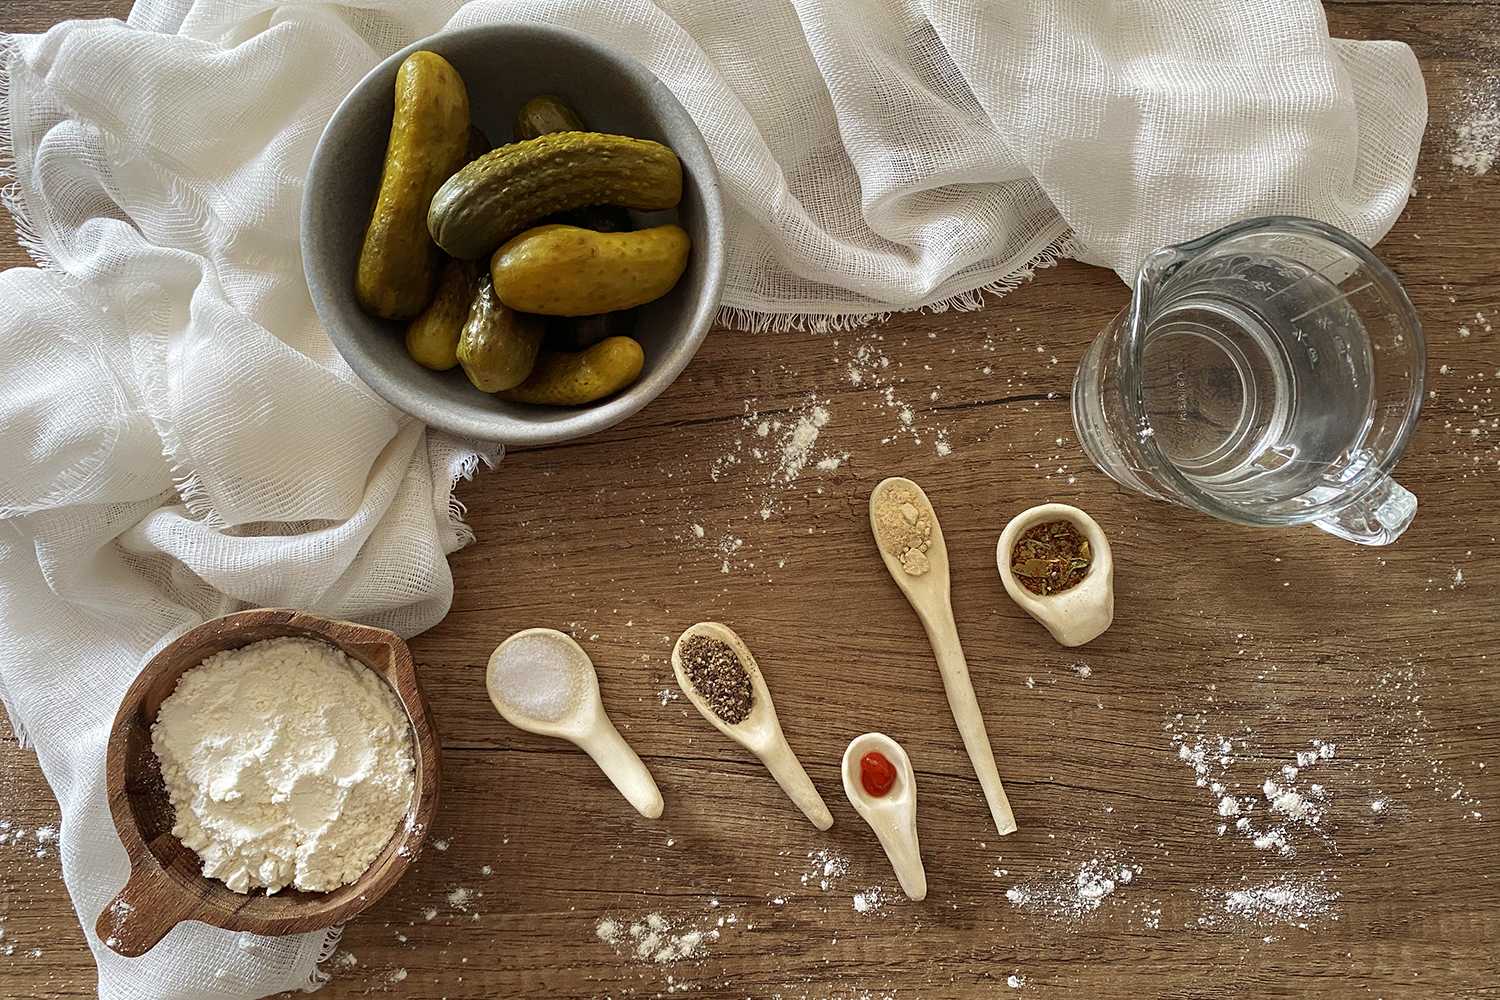 https://www.corriecooks.com/wp-content/uploads/2021/11/Instant-Pot-Fried-Pickles-Ingredients.jpg